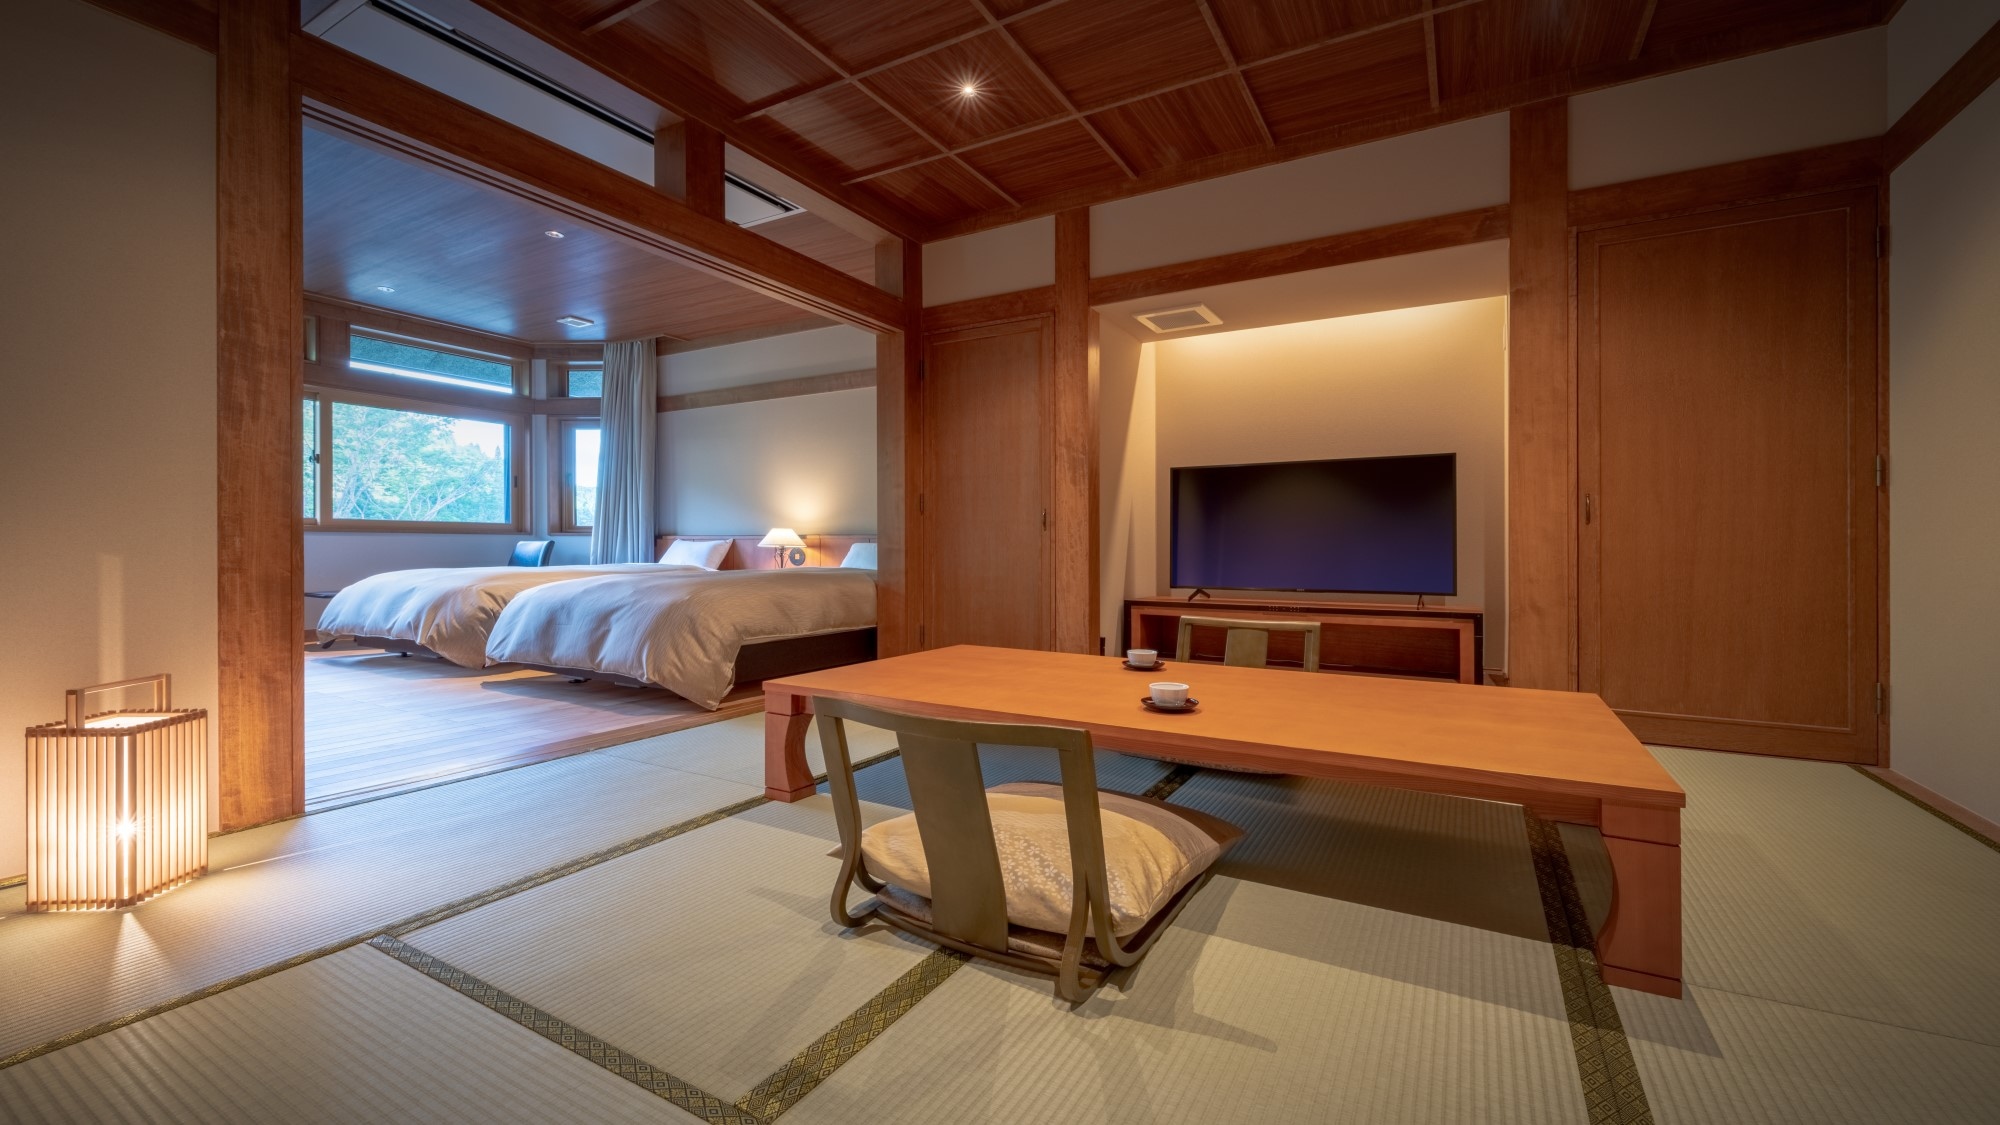 Kamar Jepang dan Barat (8 tikar tatami + kamar tidur twin) baru didirikan pada tahun 2020 [Kapasitas 5 orang]